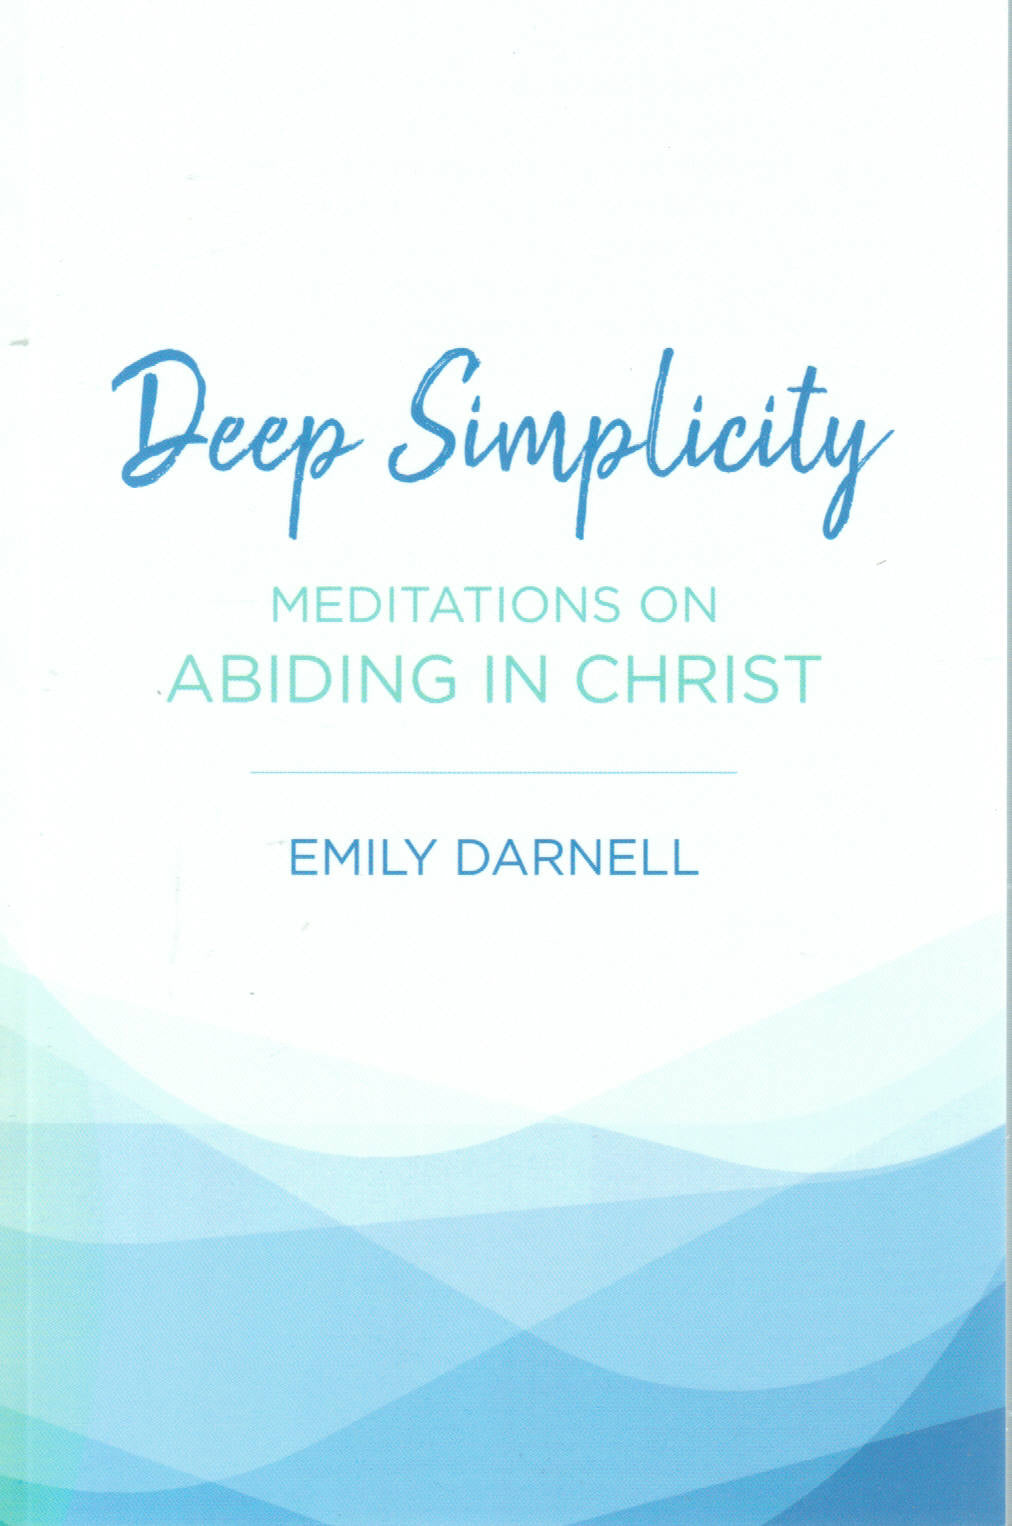 Deep Simplicity: Meditations on Abiding in Christ